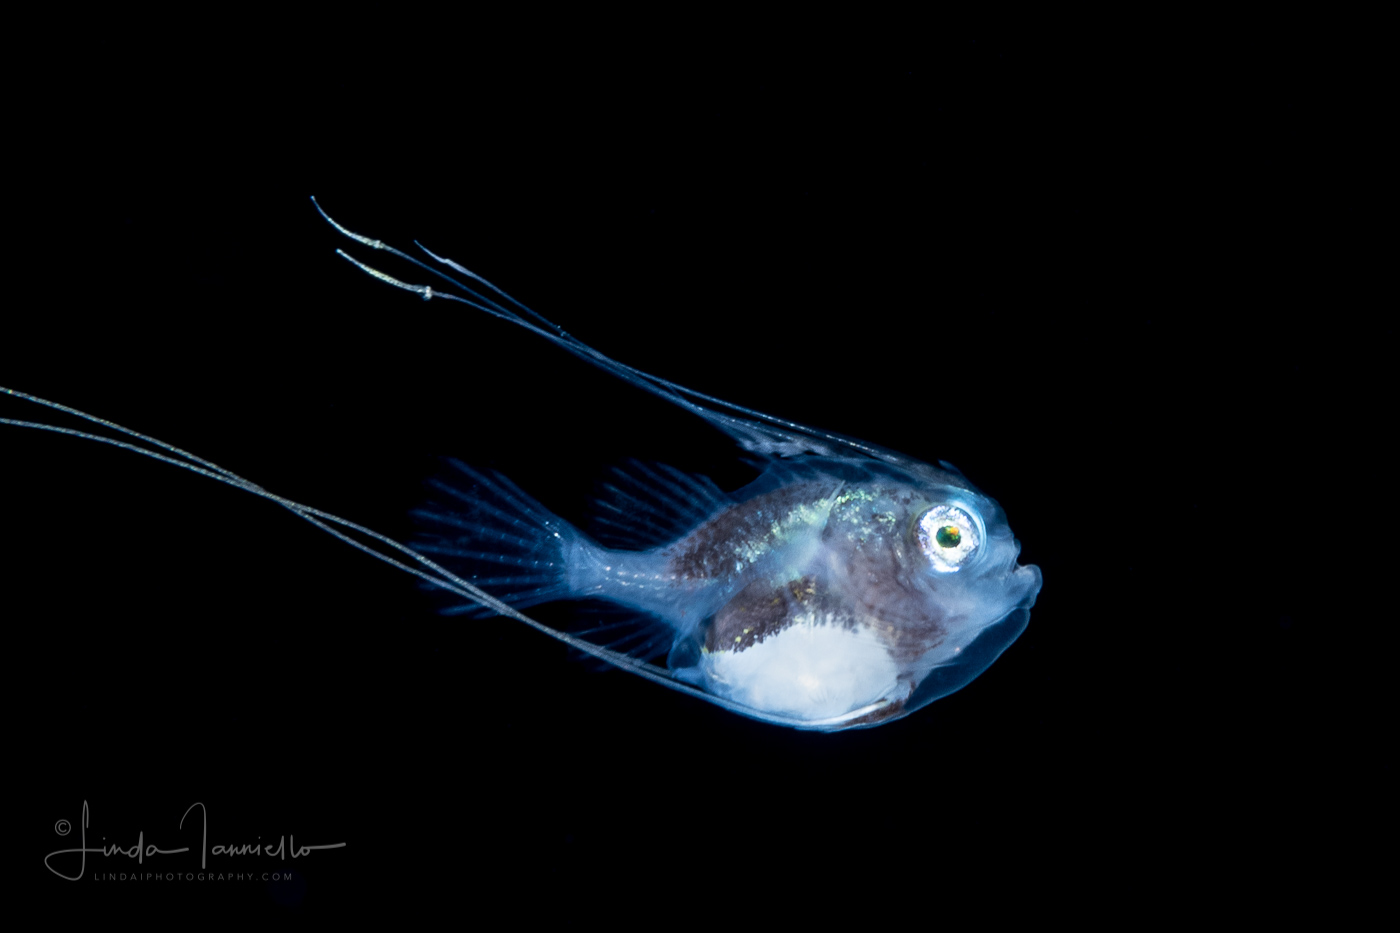 Anglerfish - Monkfish -  Lophiidae - Lophiodes species